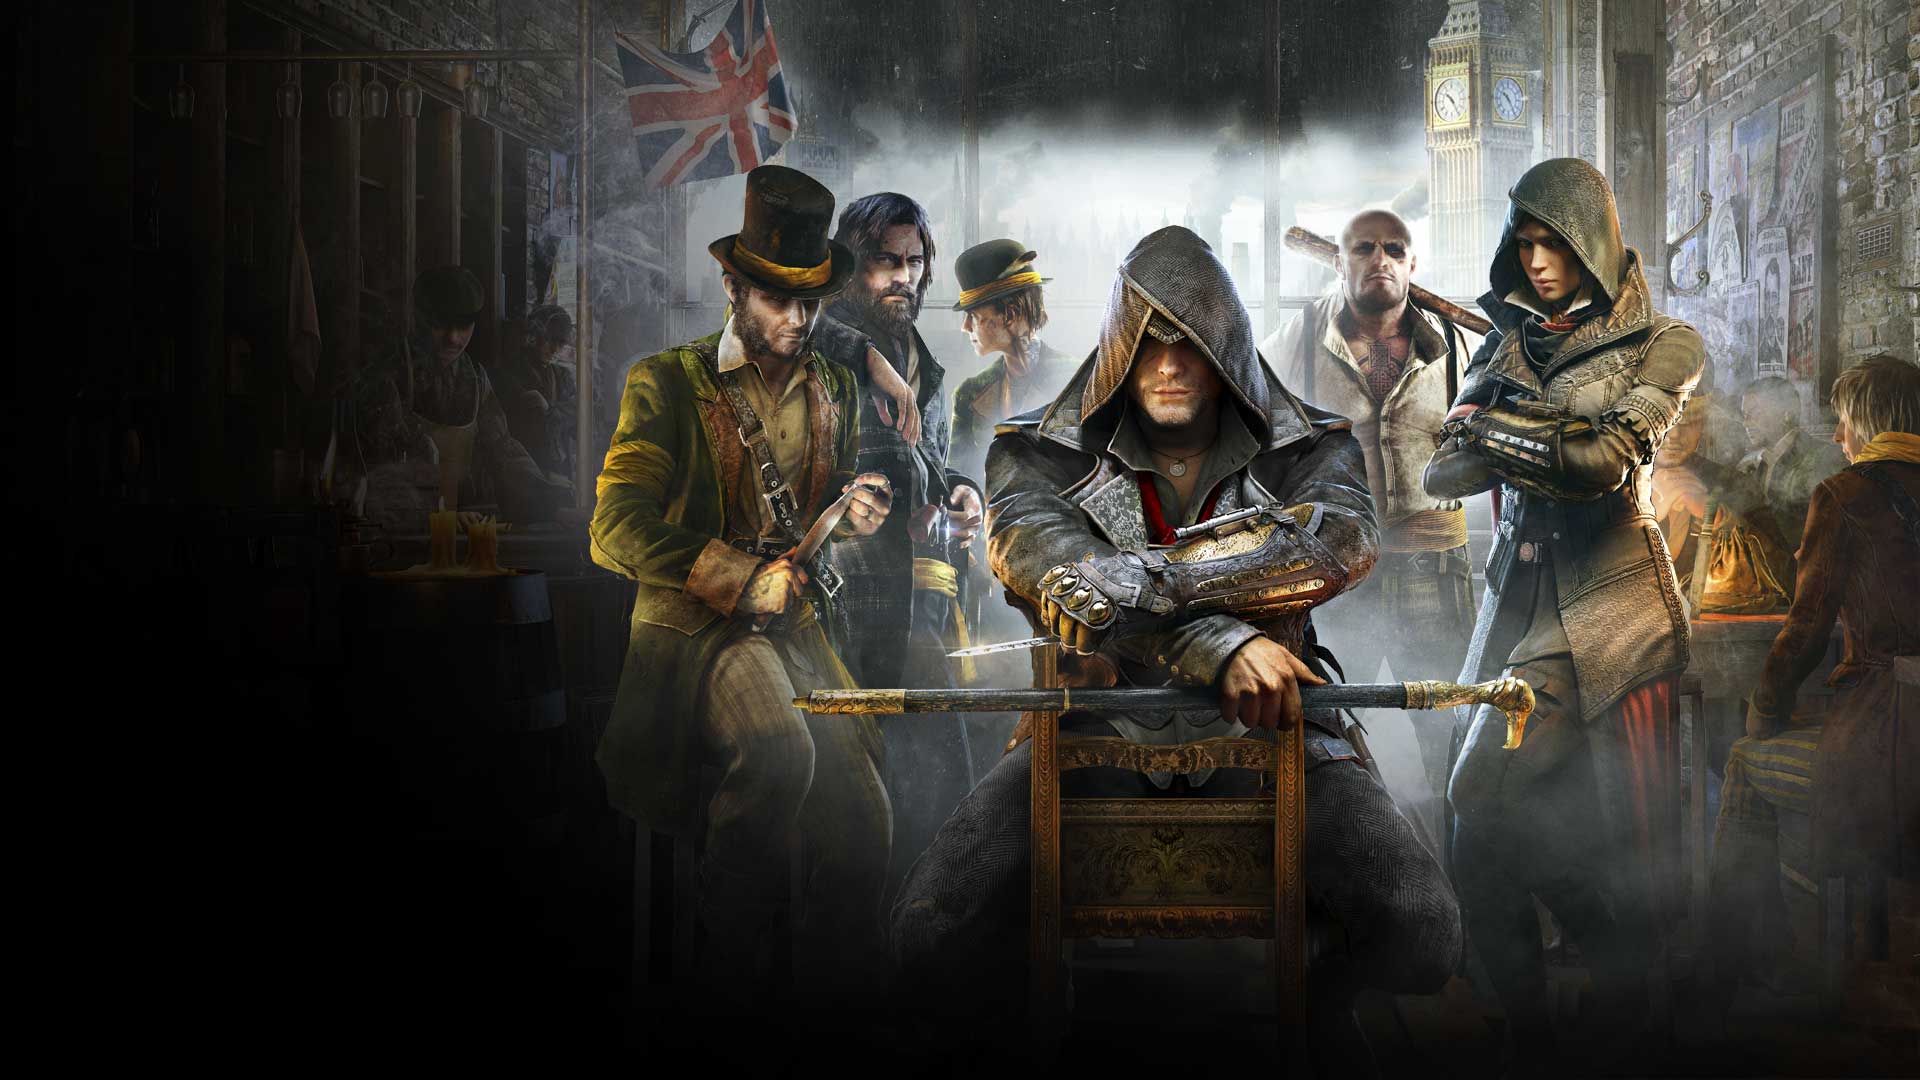 Assassin's Creed Triple Pack - Black Flag, Unity, Syndicate ARG Xbox O –  RoyalCDKeys